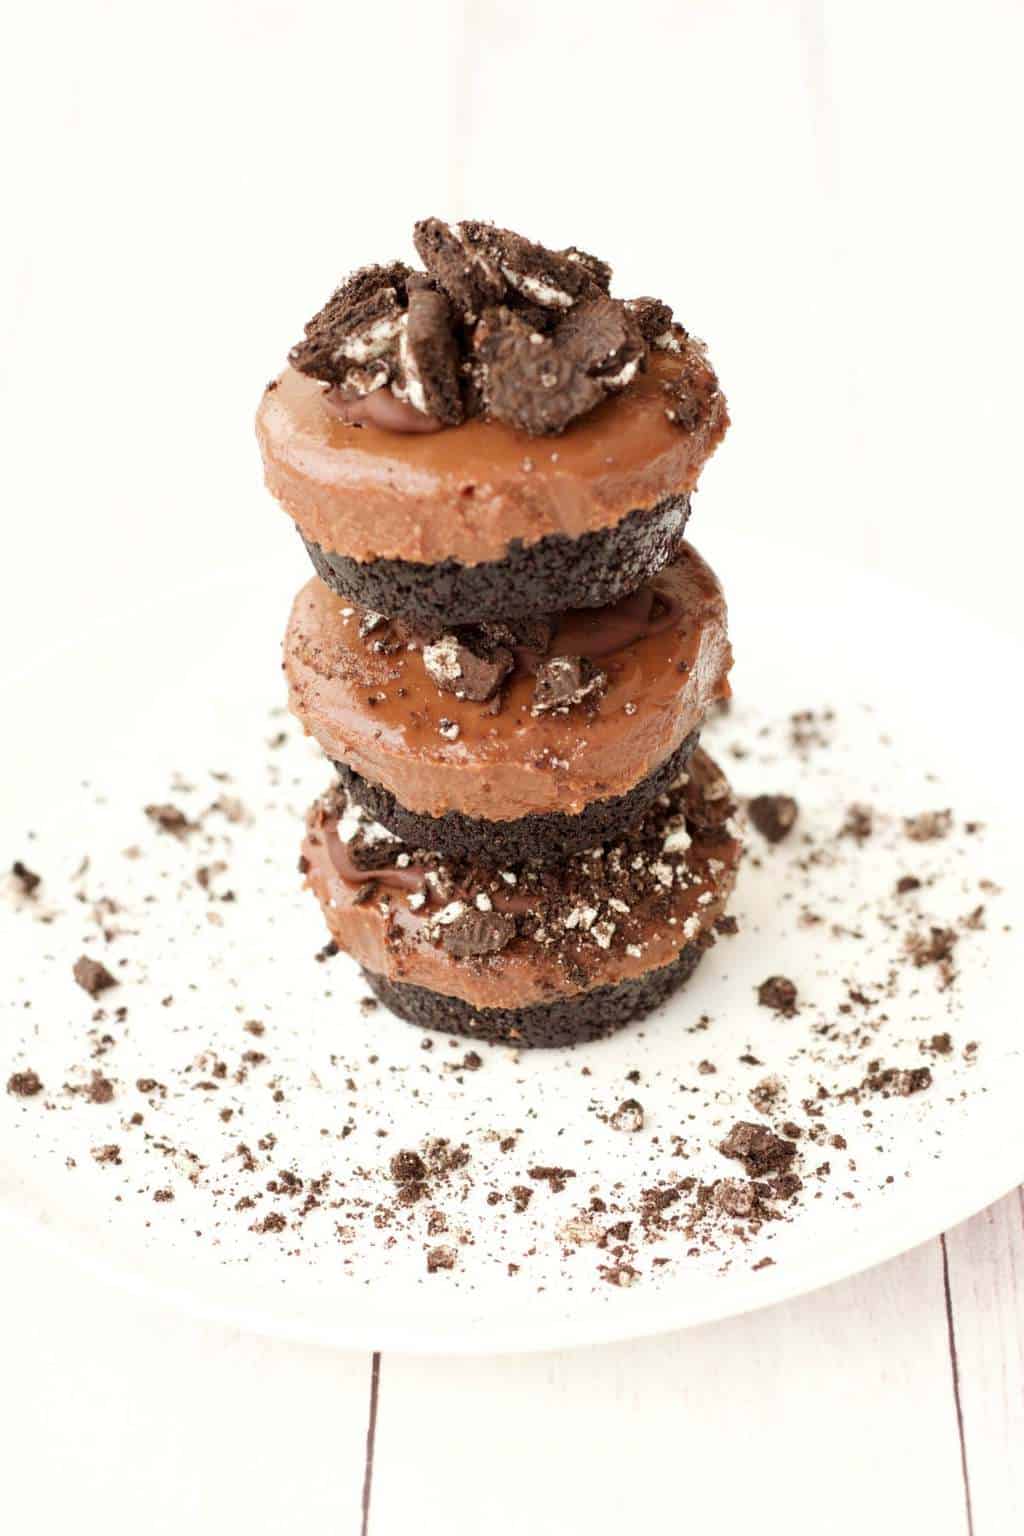 Mini Vegan Choklad Cheesecakes #vegan #lovegitvegan #cheesecakes #dessert #dairyfree #oreos